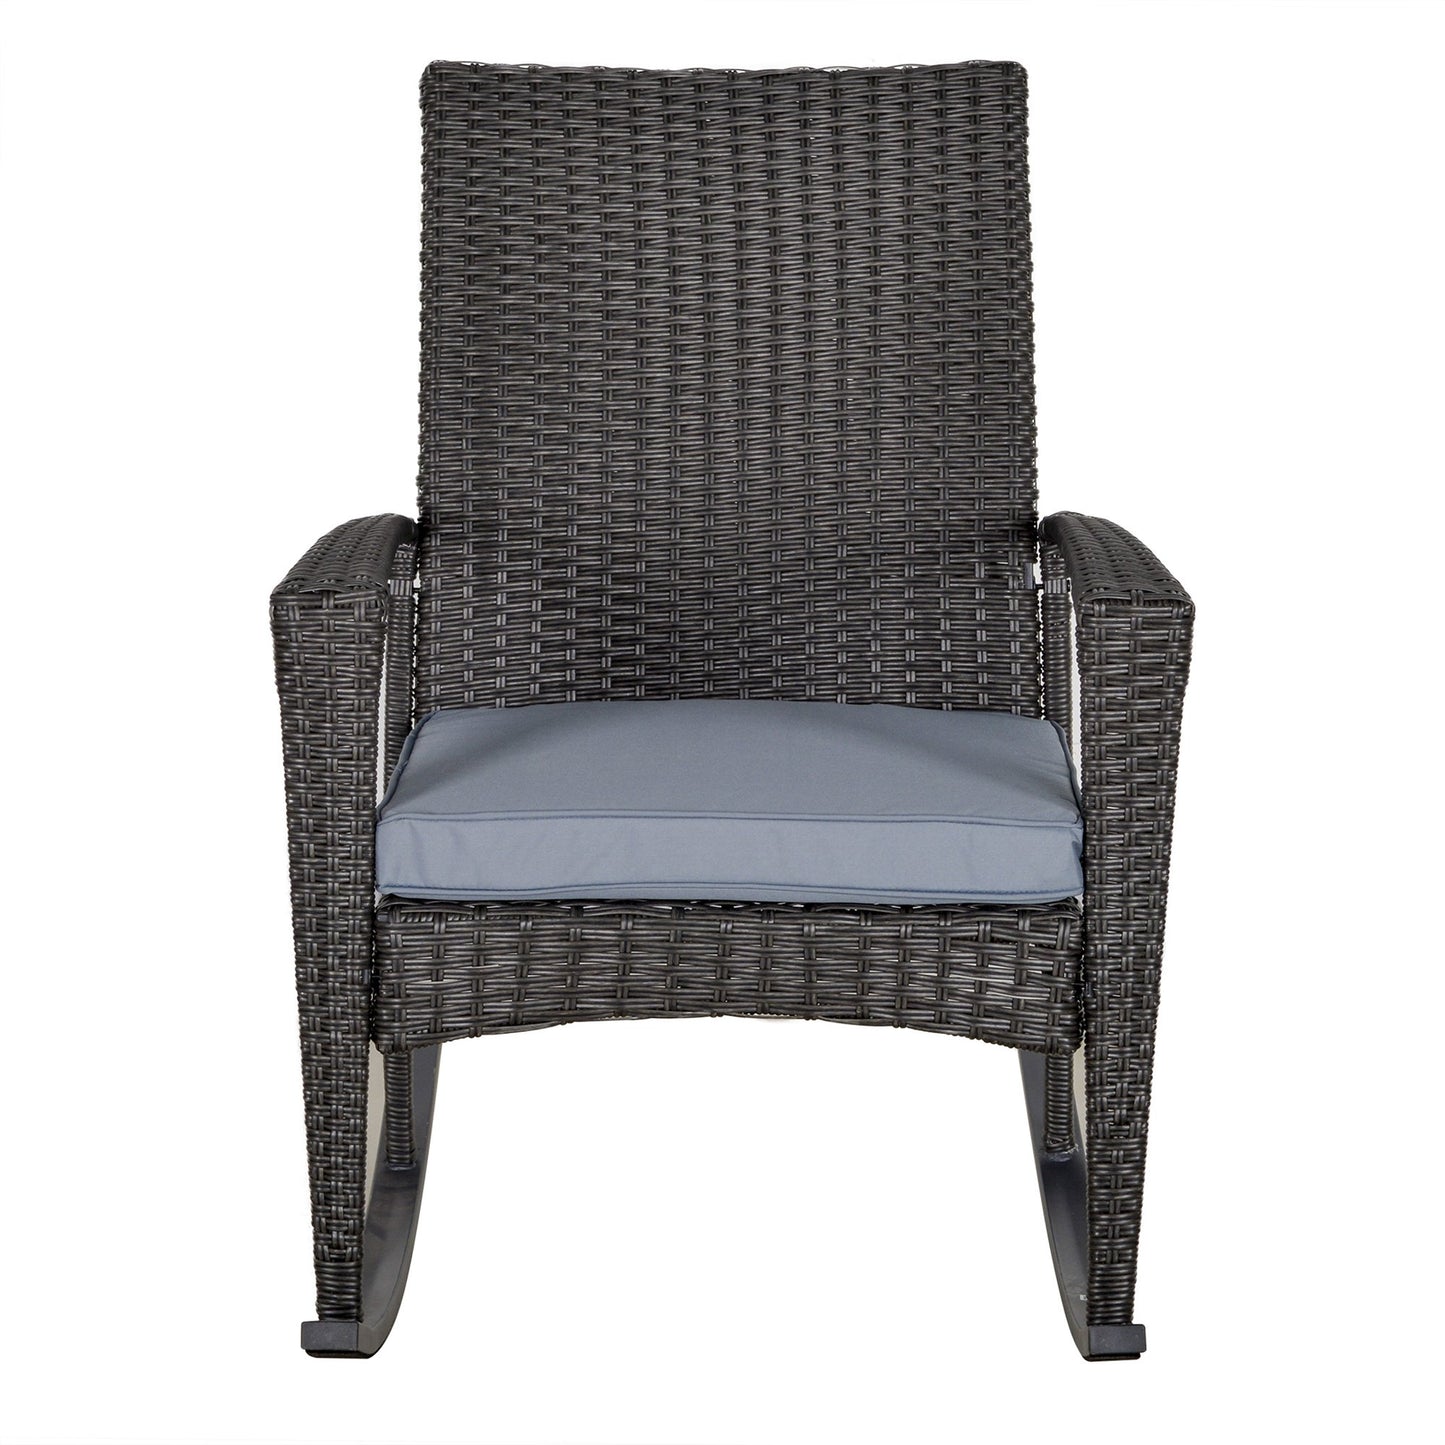 Outsunny PE Rattan Outdoor Garden Rocking Chair w/ Cushion Grey